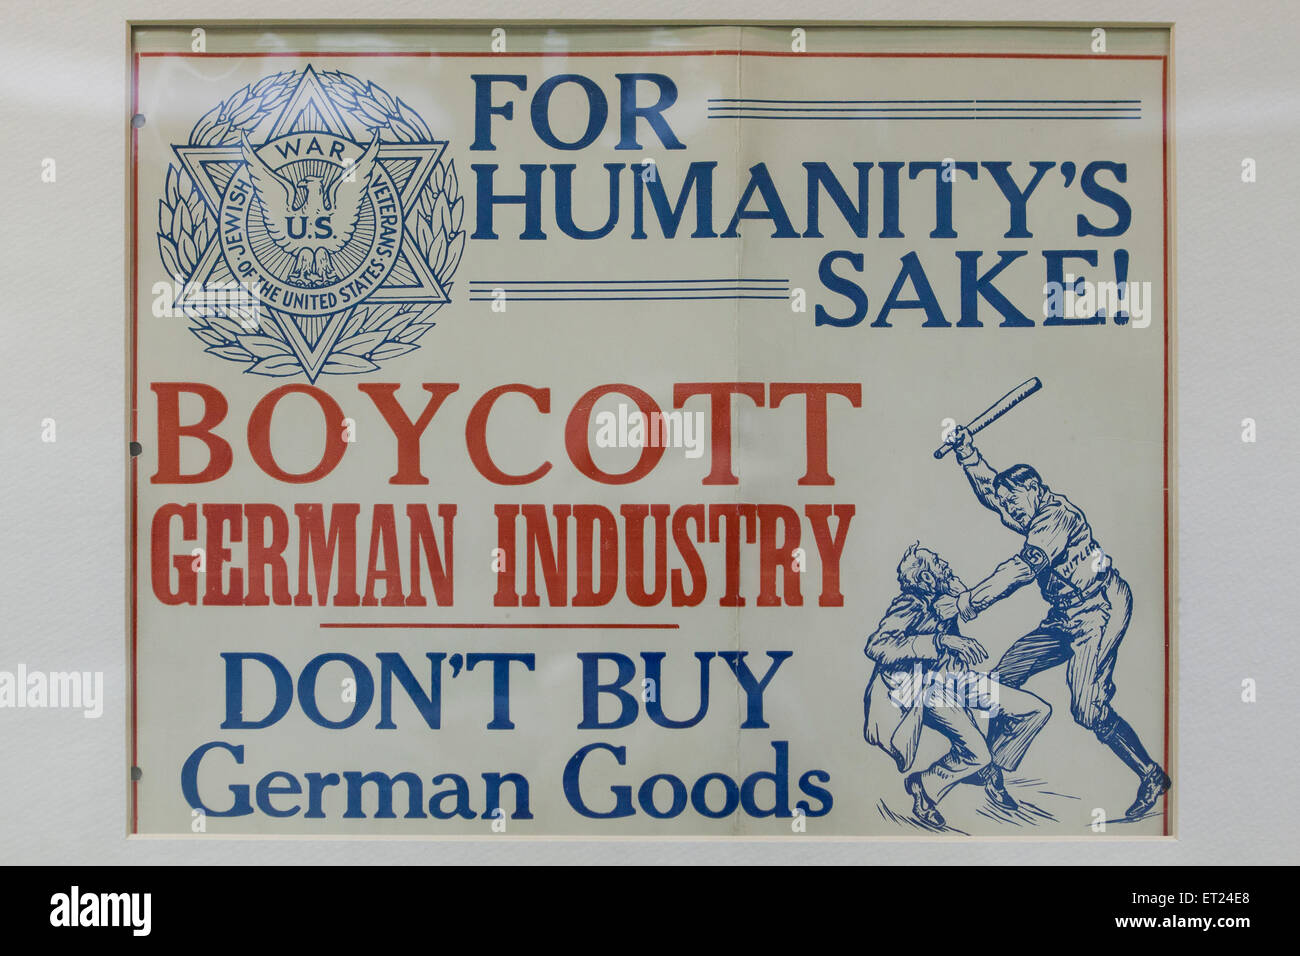 The Anti-NAZI Boycott German Industry poster by The Non-Sectarian Anti-Nazi League, 1936 Stock Photo